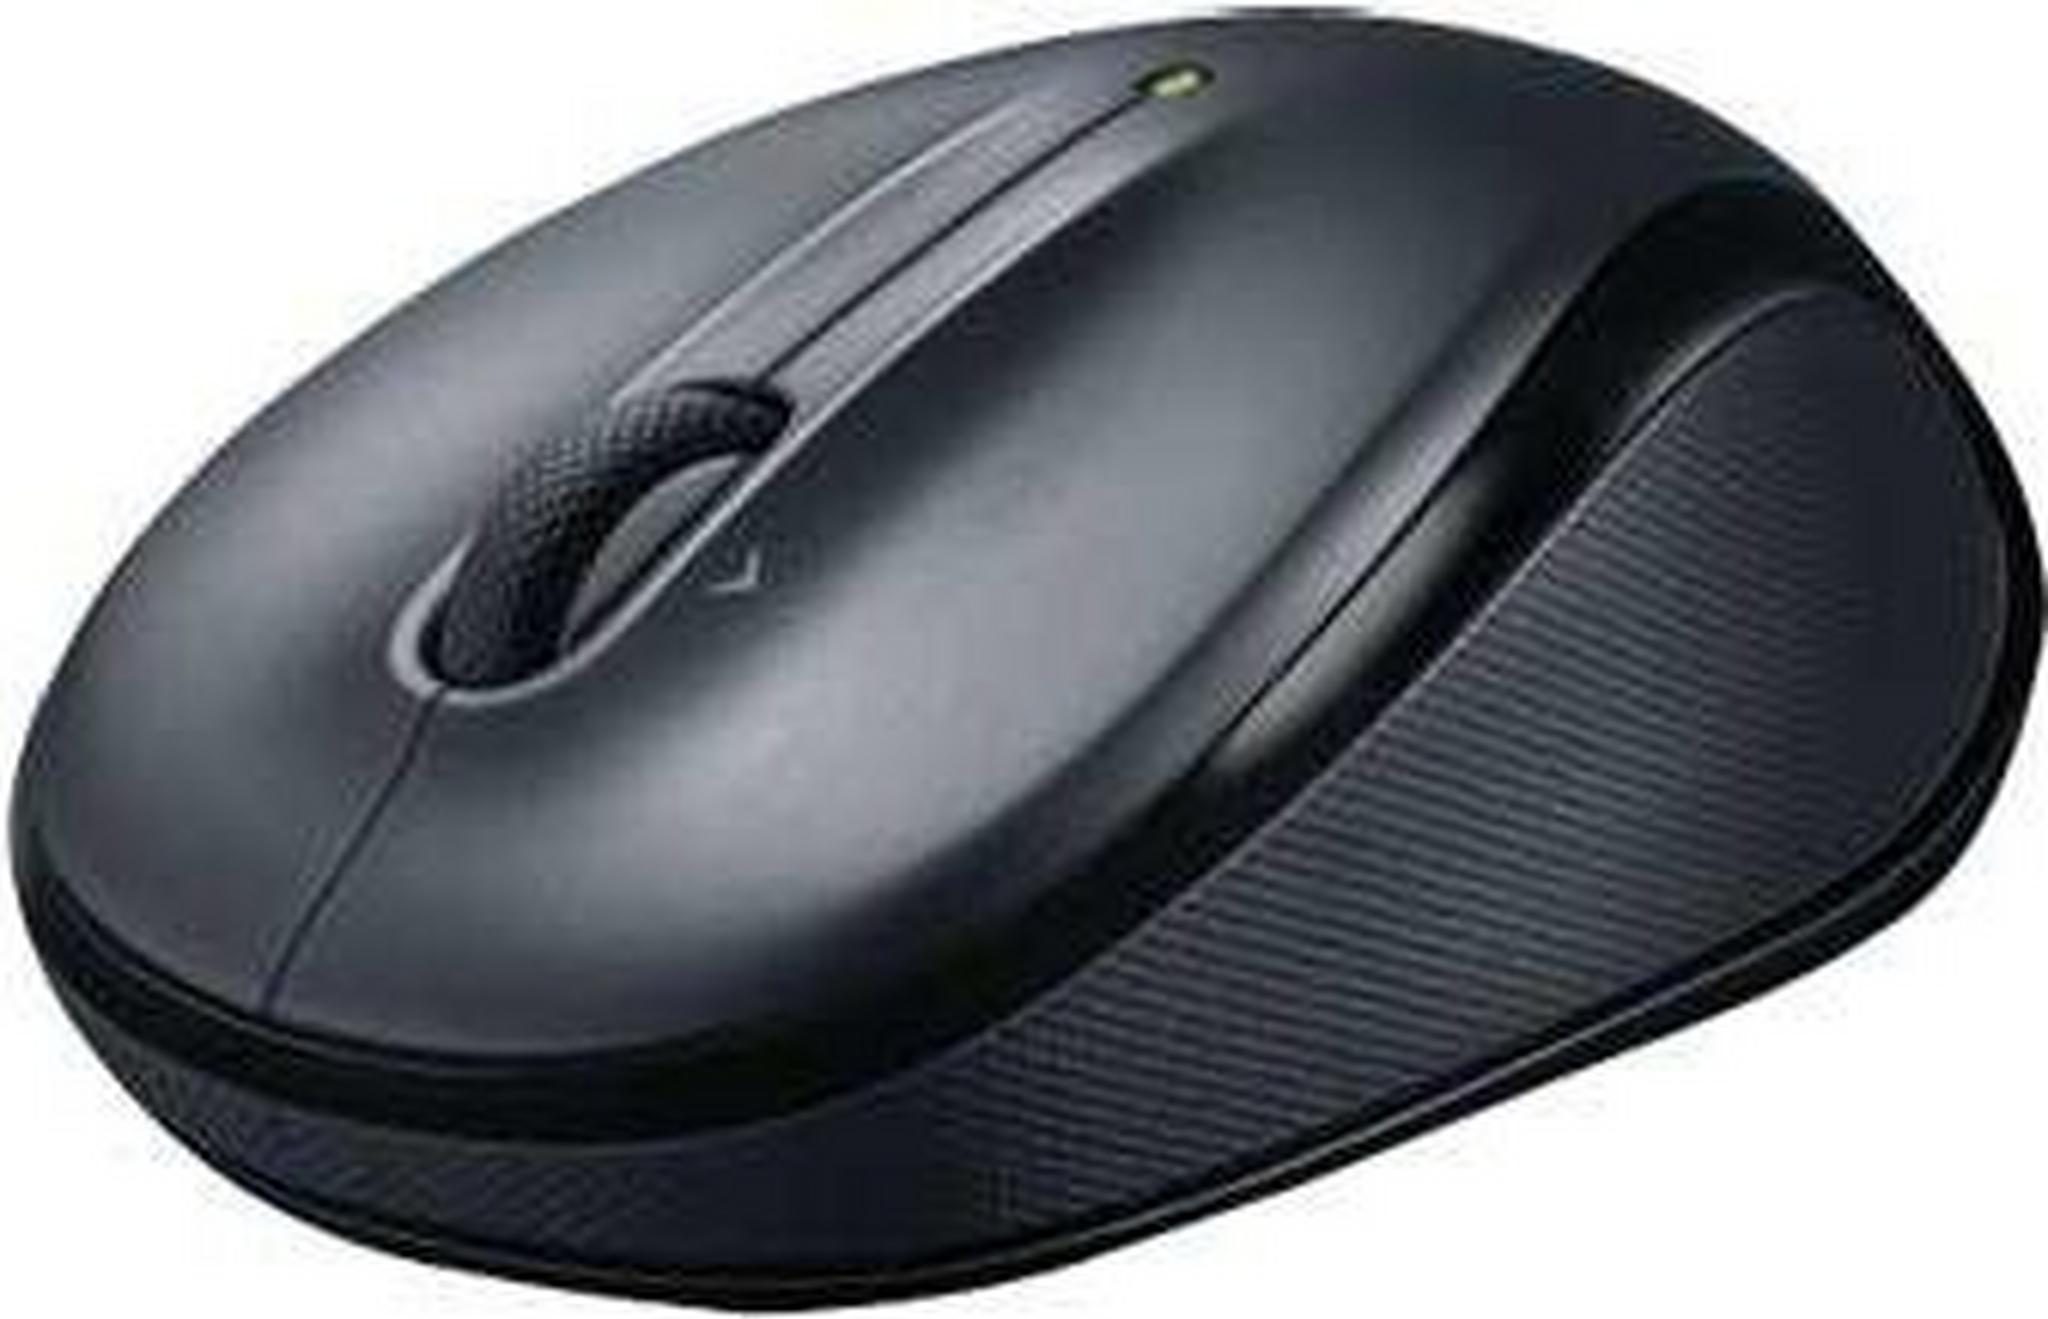 LOGITECH Wireless Mouse (M325) - Grey